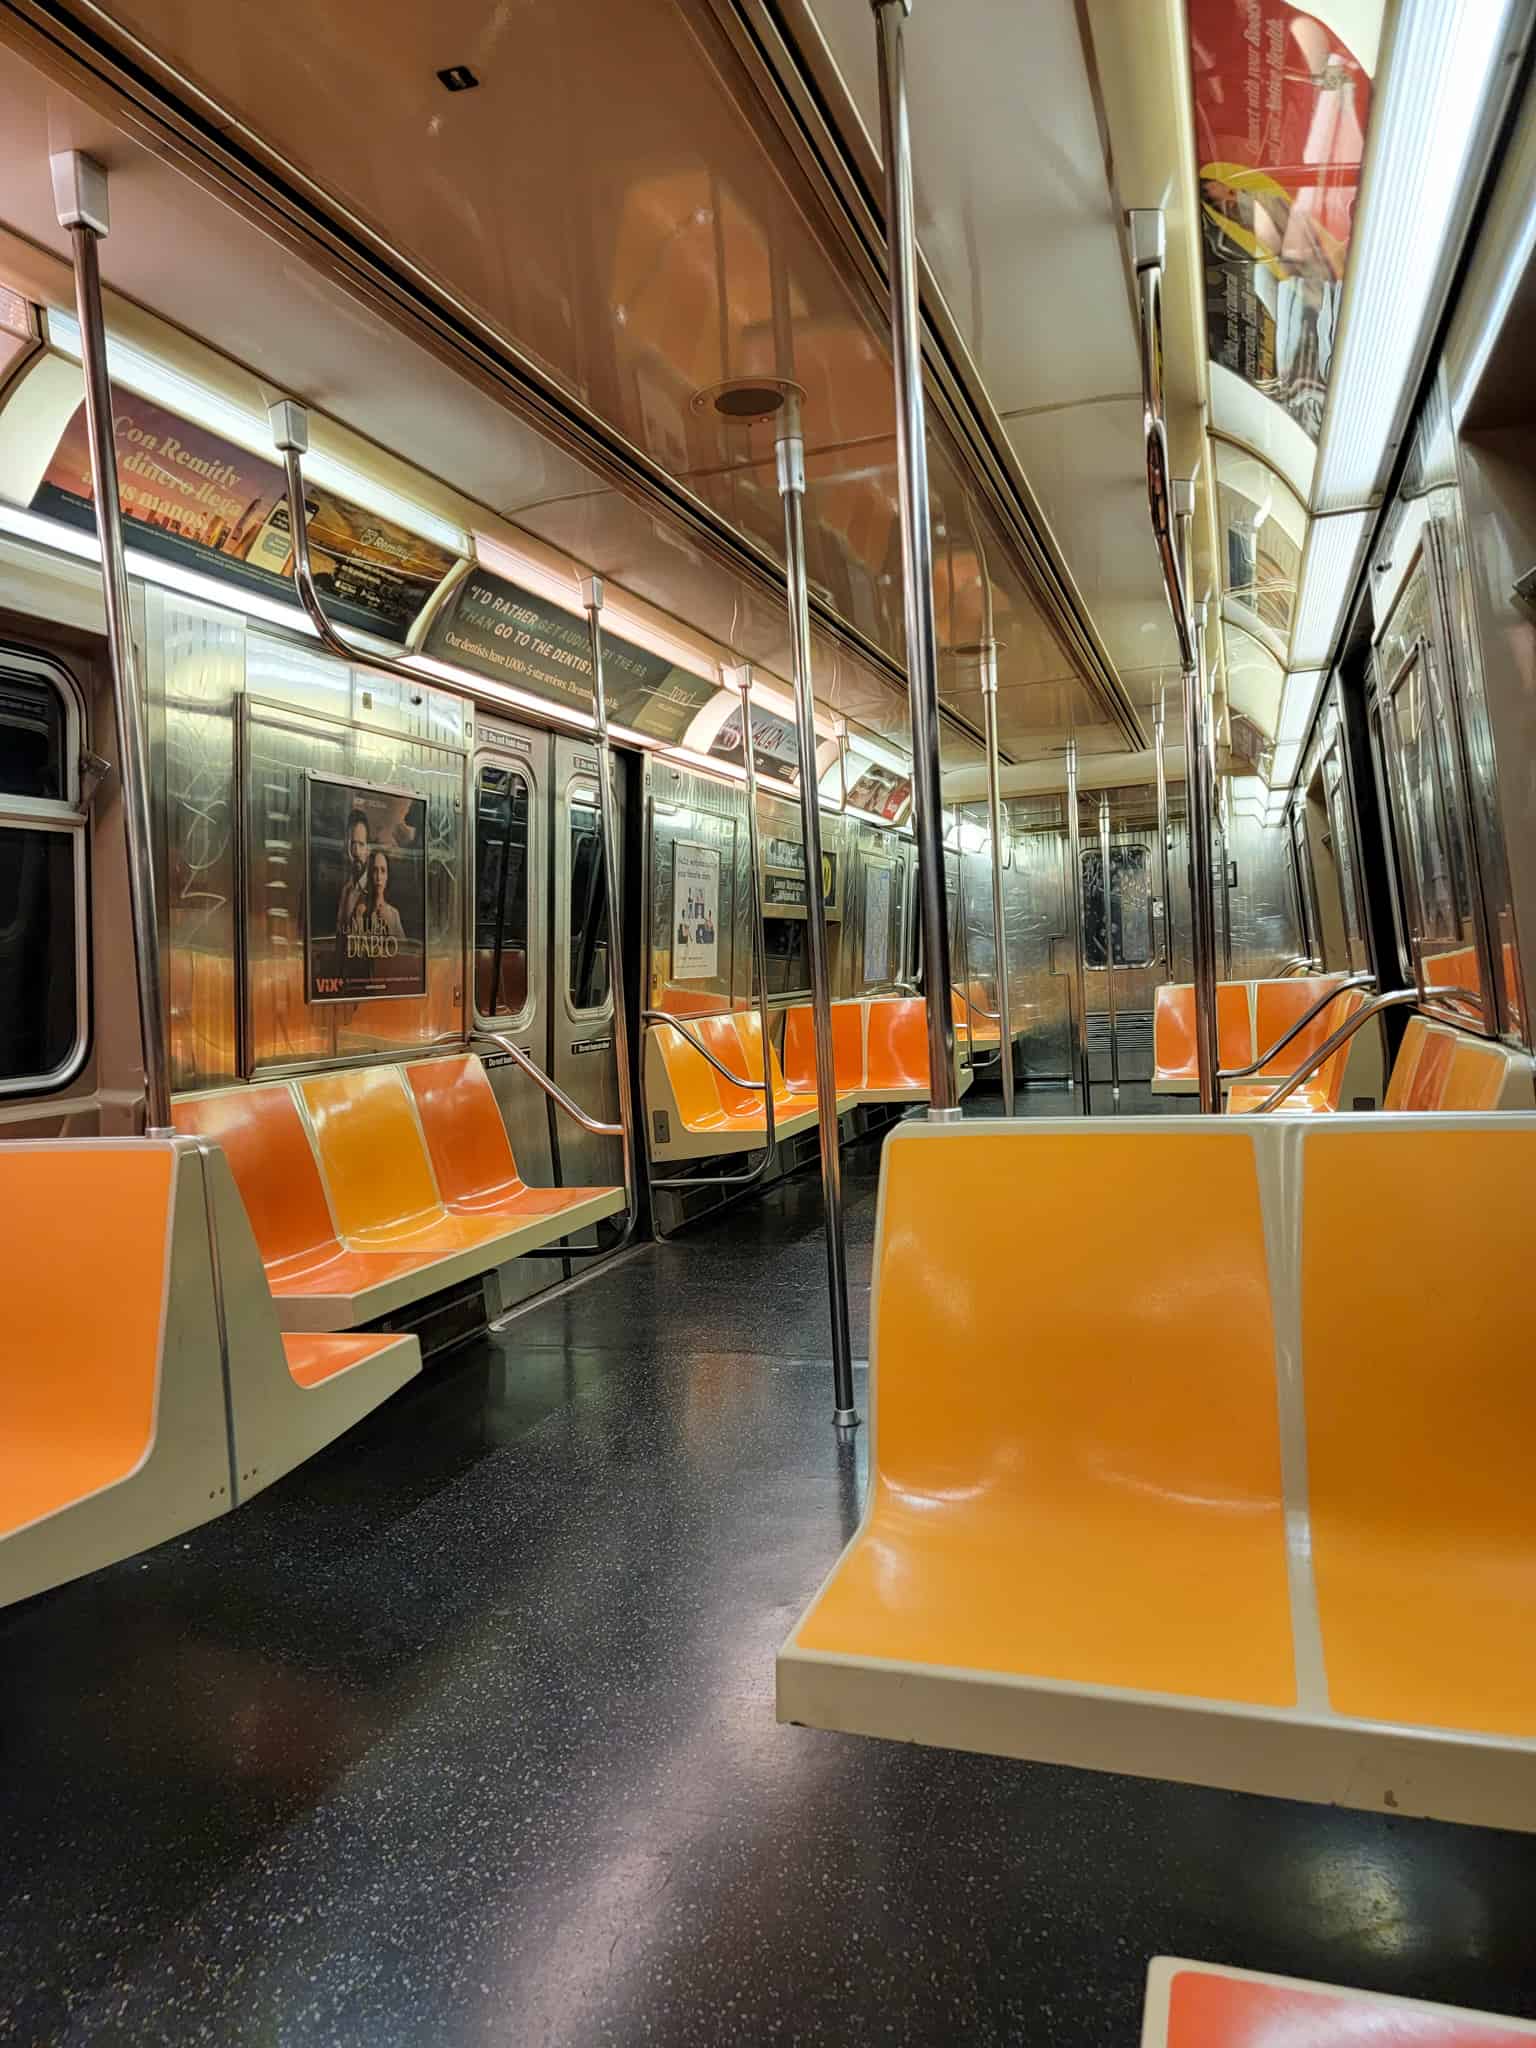 Empty car of a NYC subway